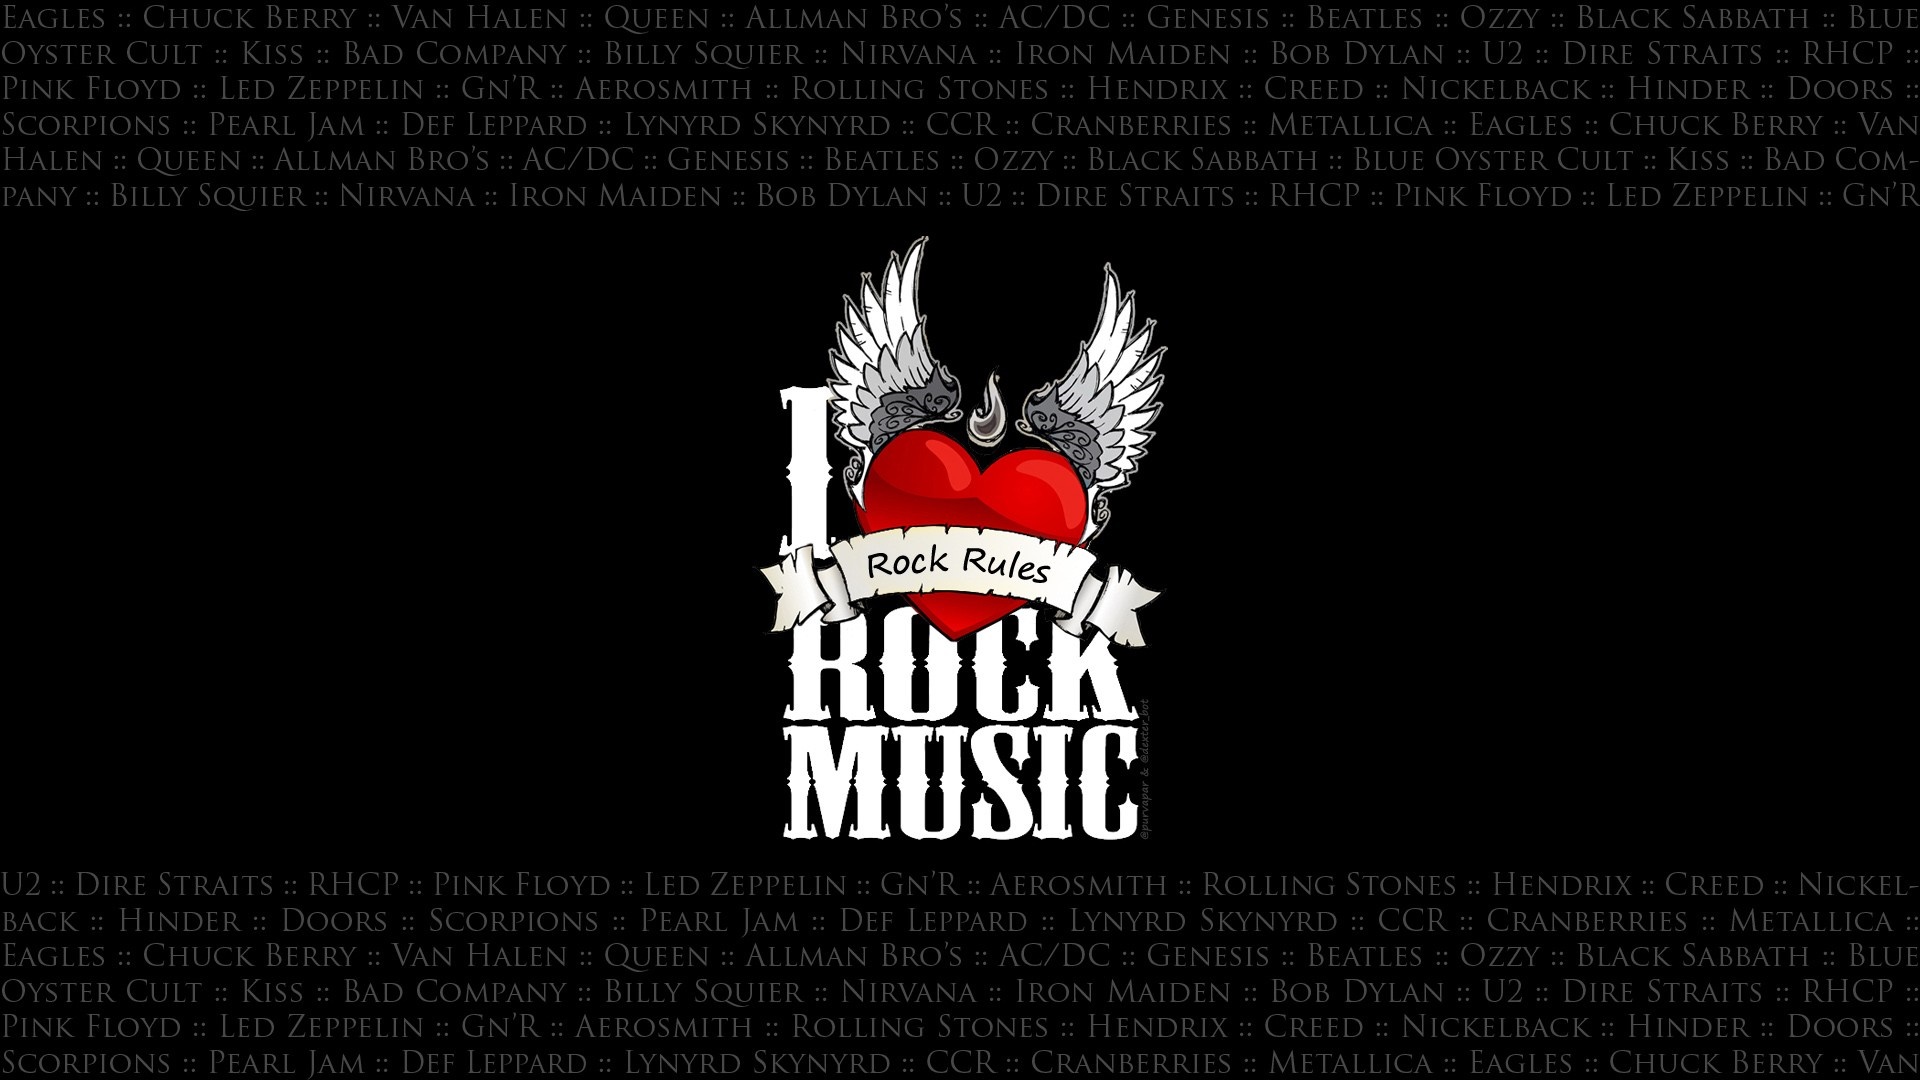 I Love Rock Music wallpaper - backiee